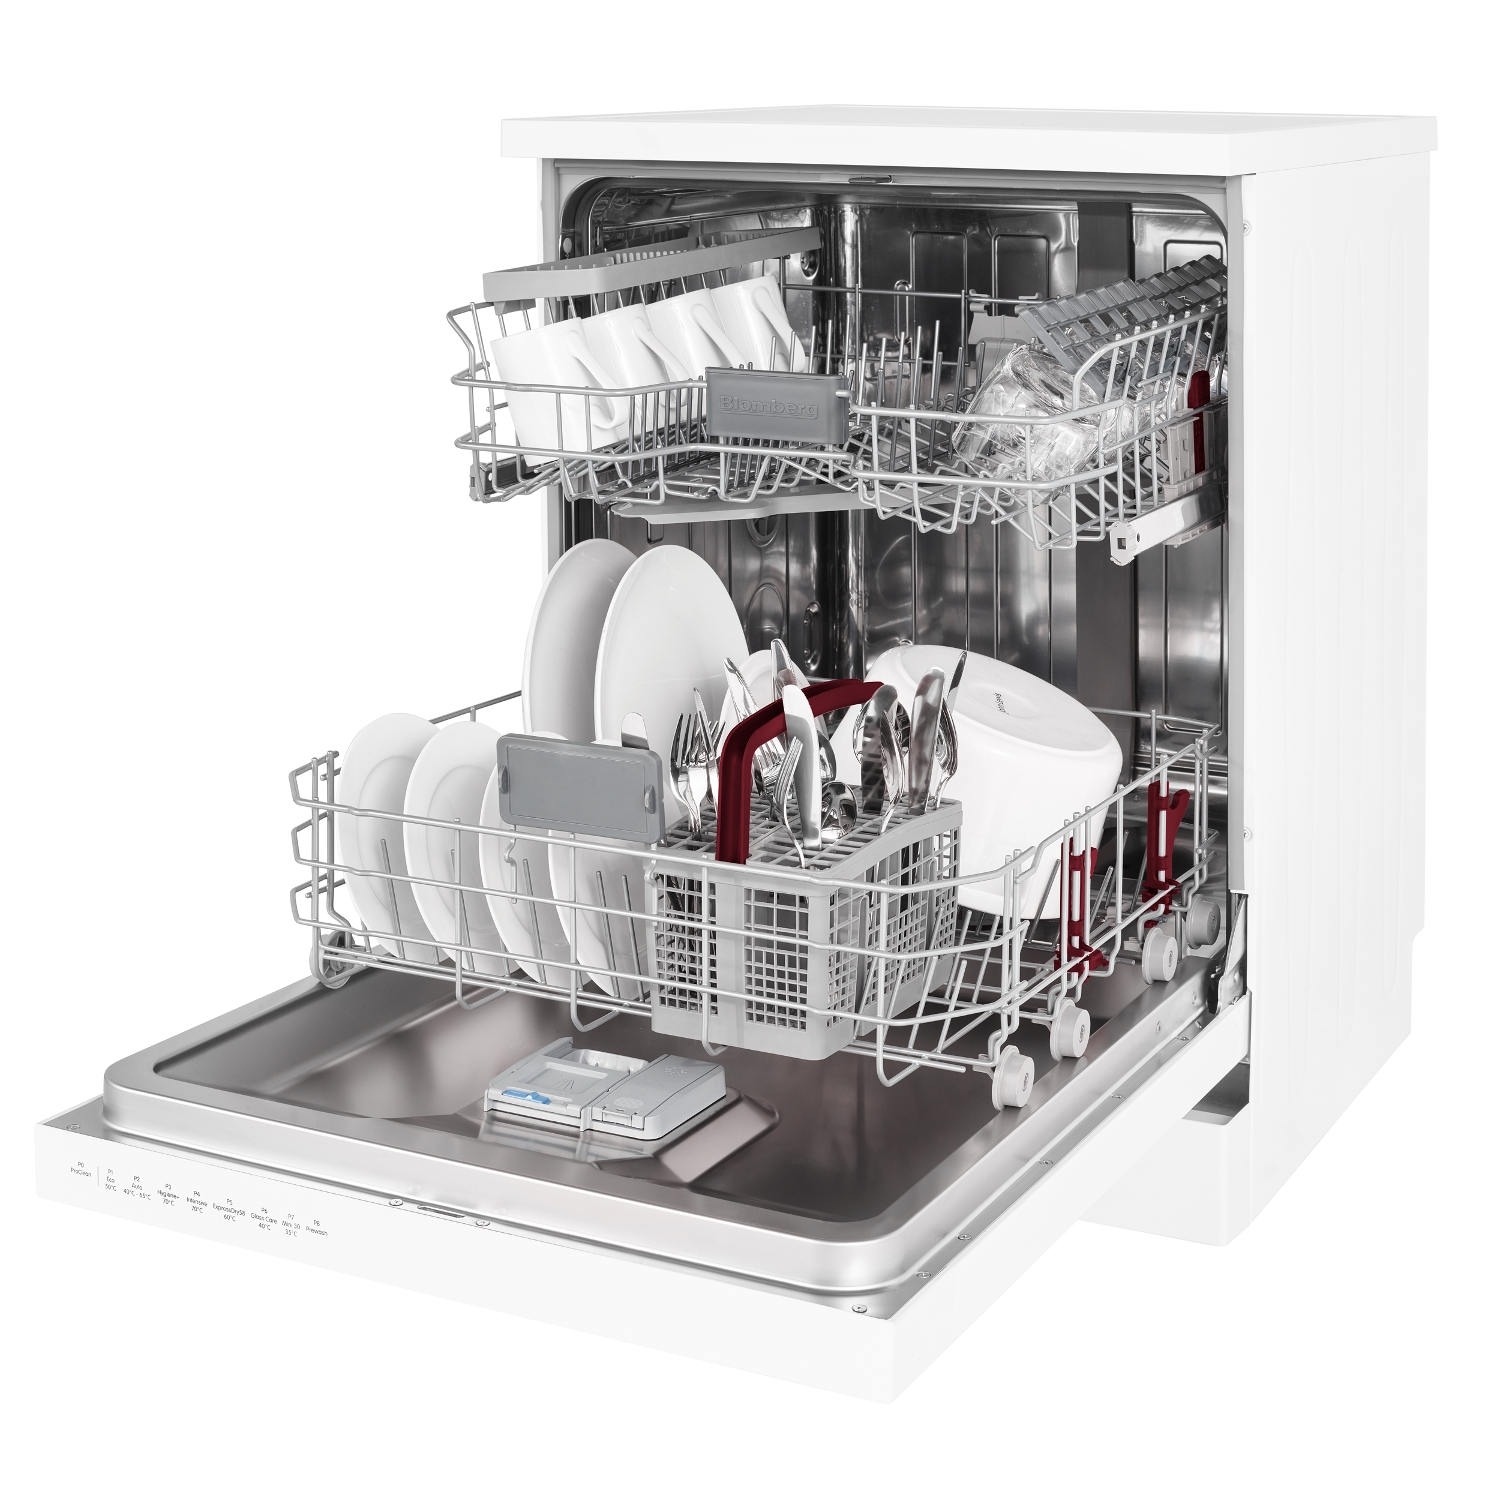 Blomberg LDF42240W Full Size Dishwasher - White - 14 Place Settings - 2